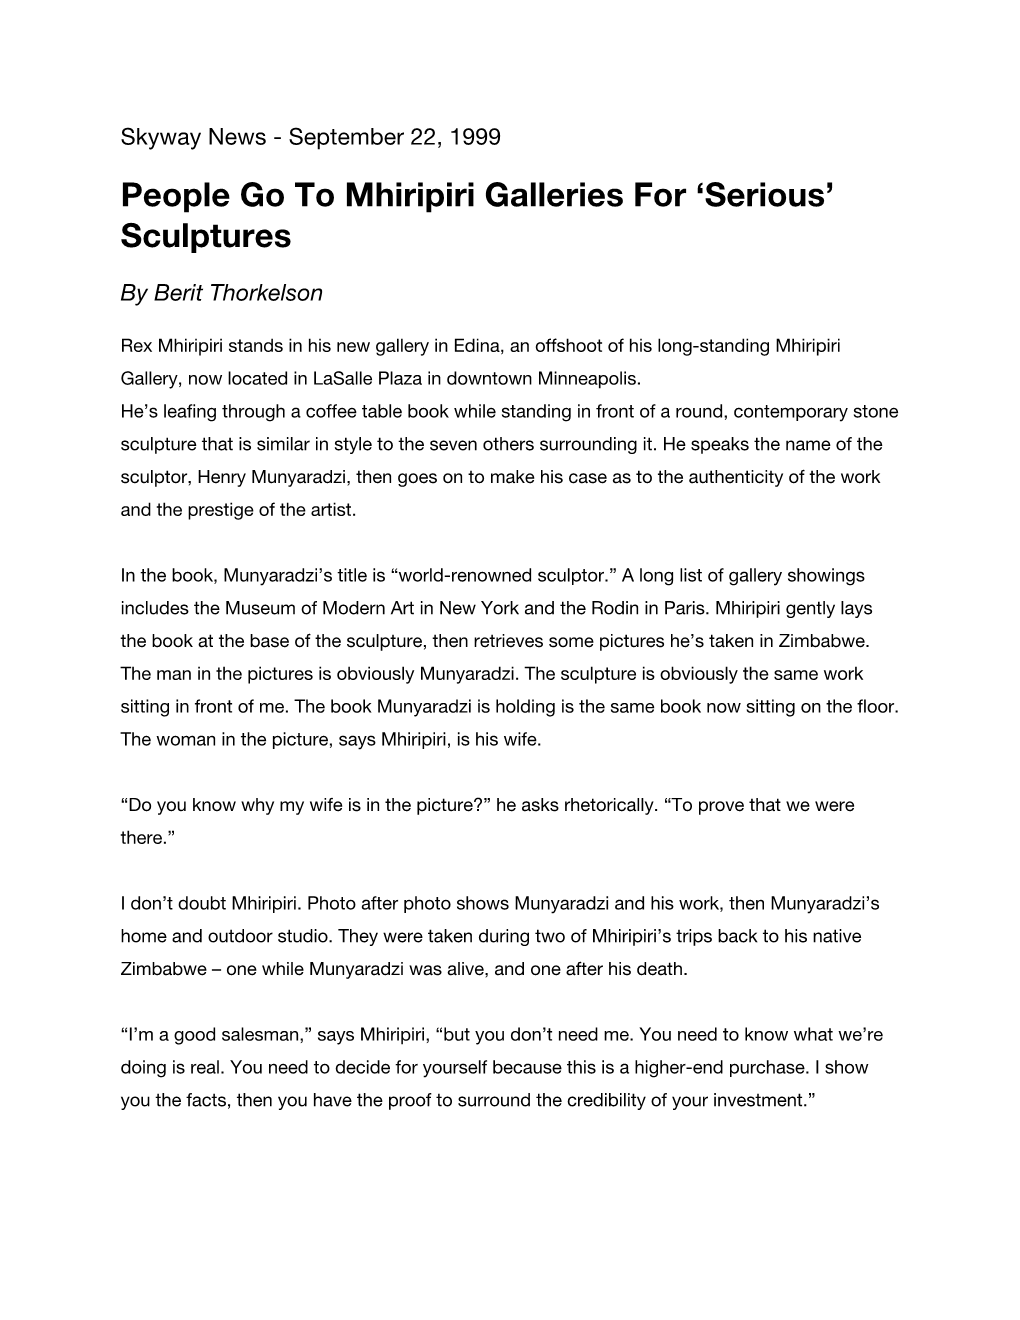 People Go to Mhiripiri Galleries for 'Serious' Sculptures